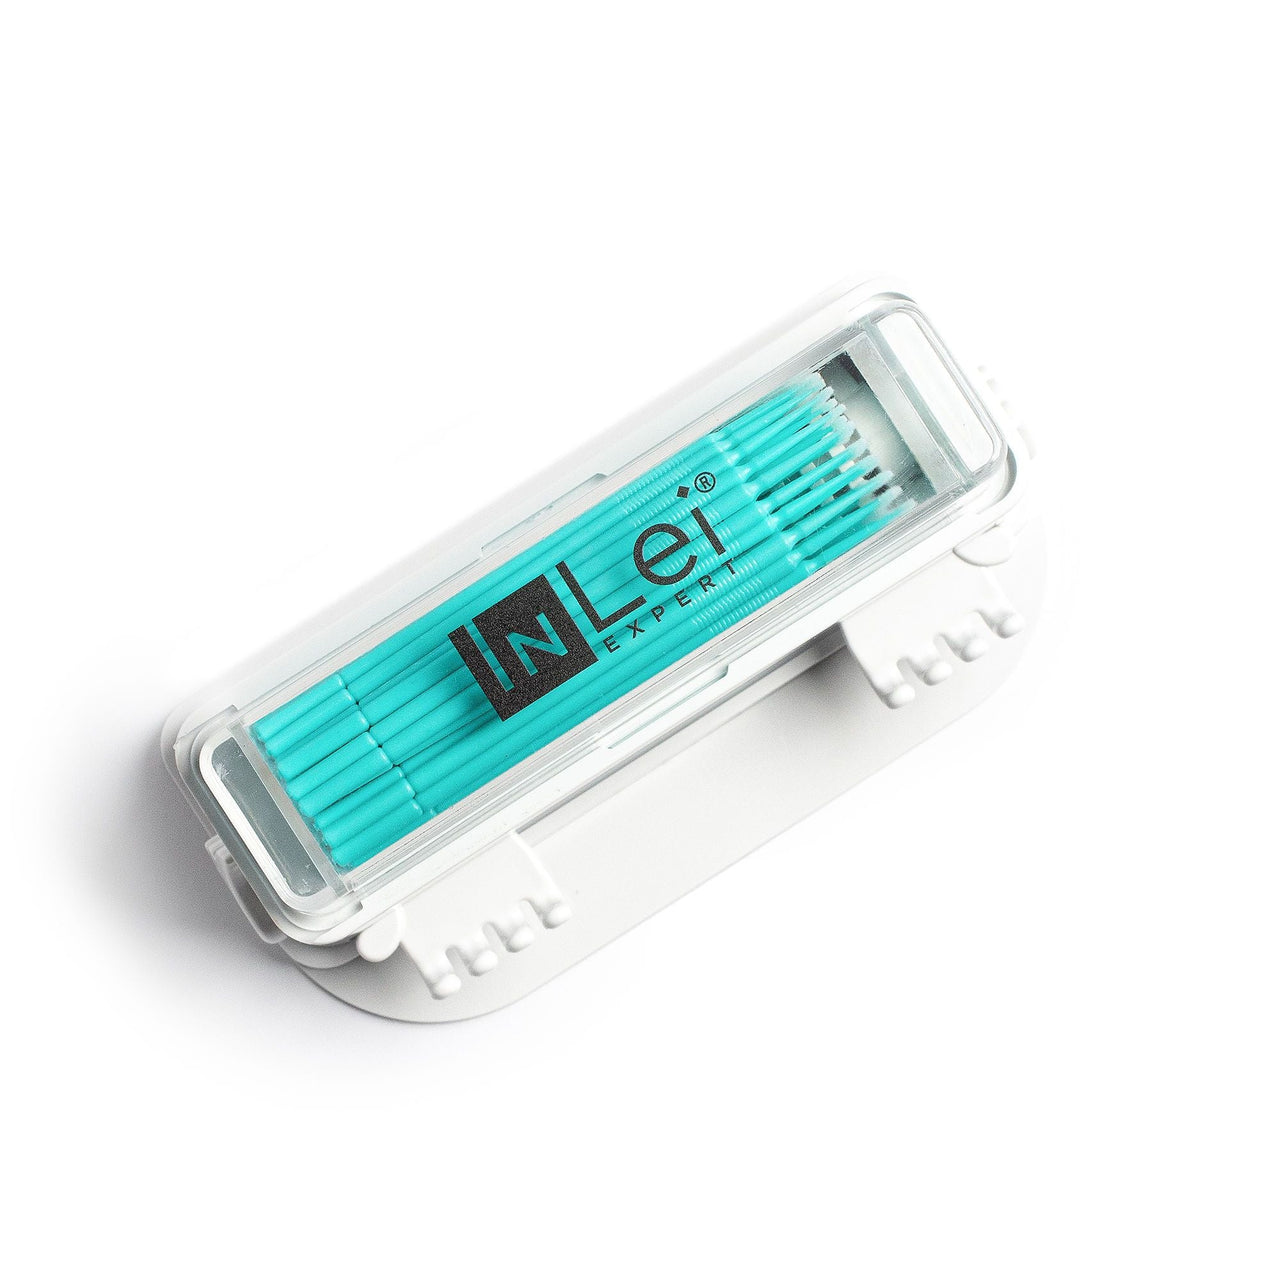 InLei® | Pusher Dispenser for Microbrushes - inlei.com